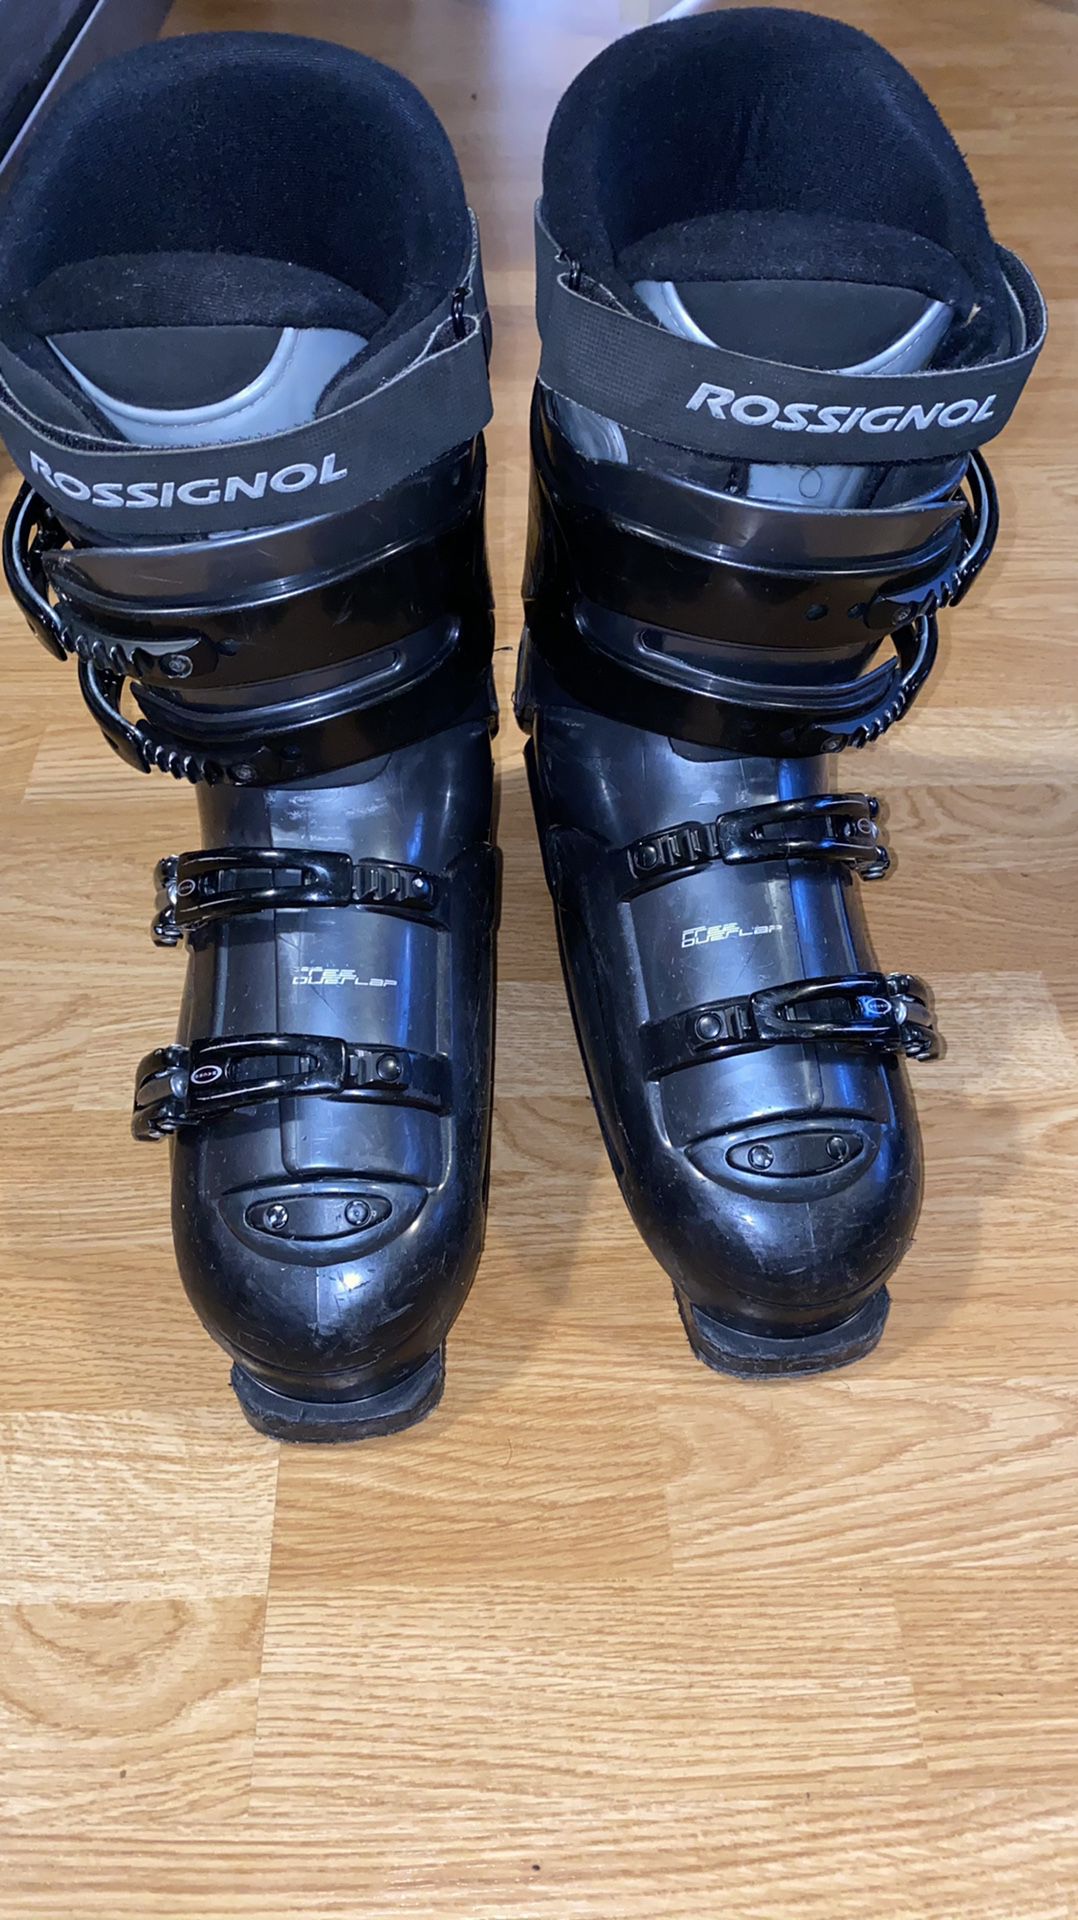 Rossignol ski boots size 335mm 11/11.5 men’s